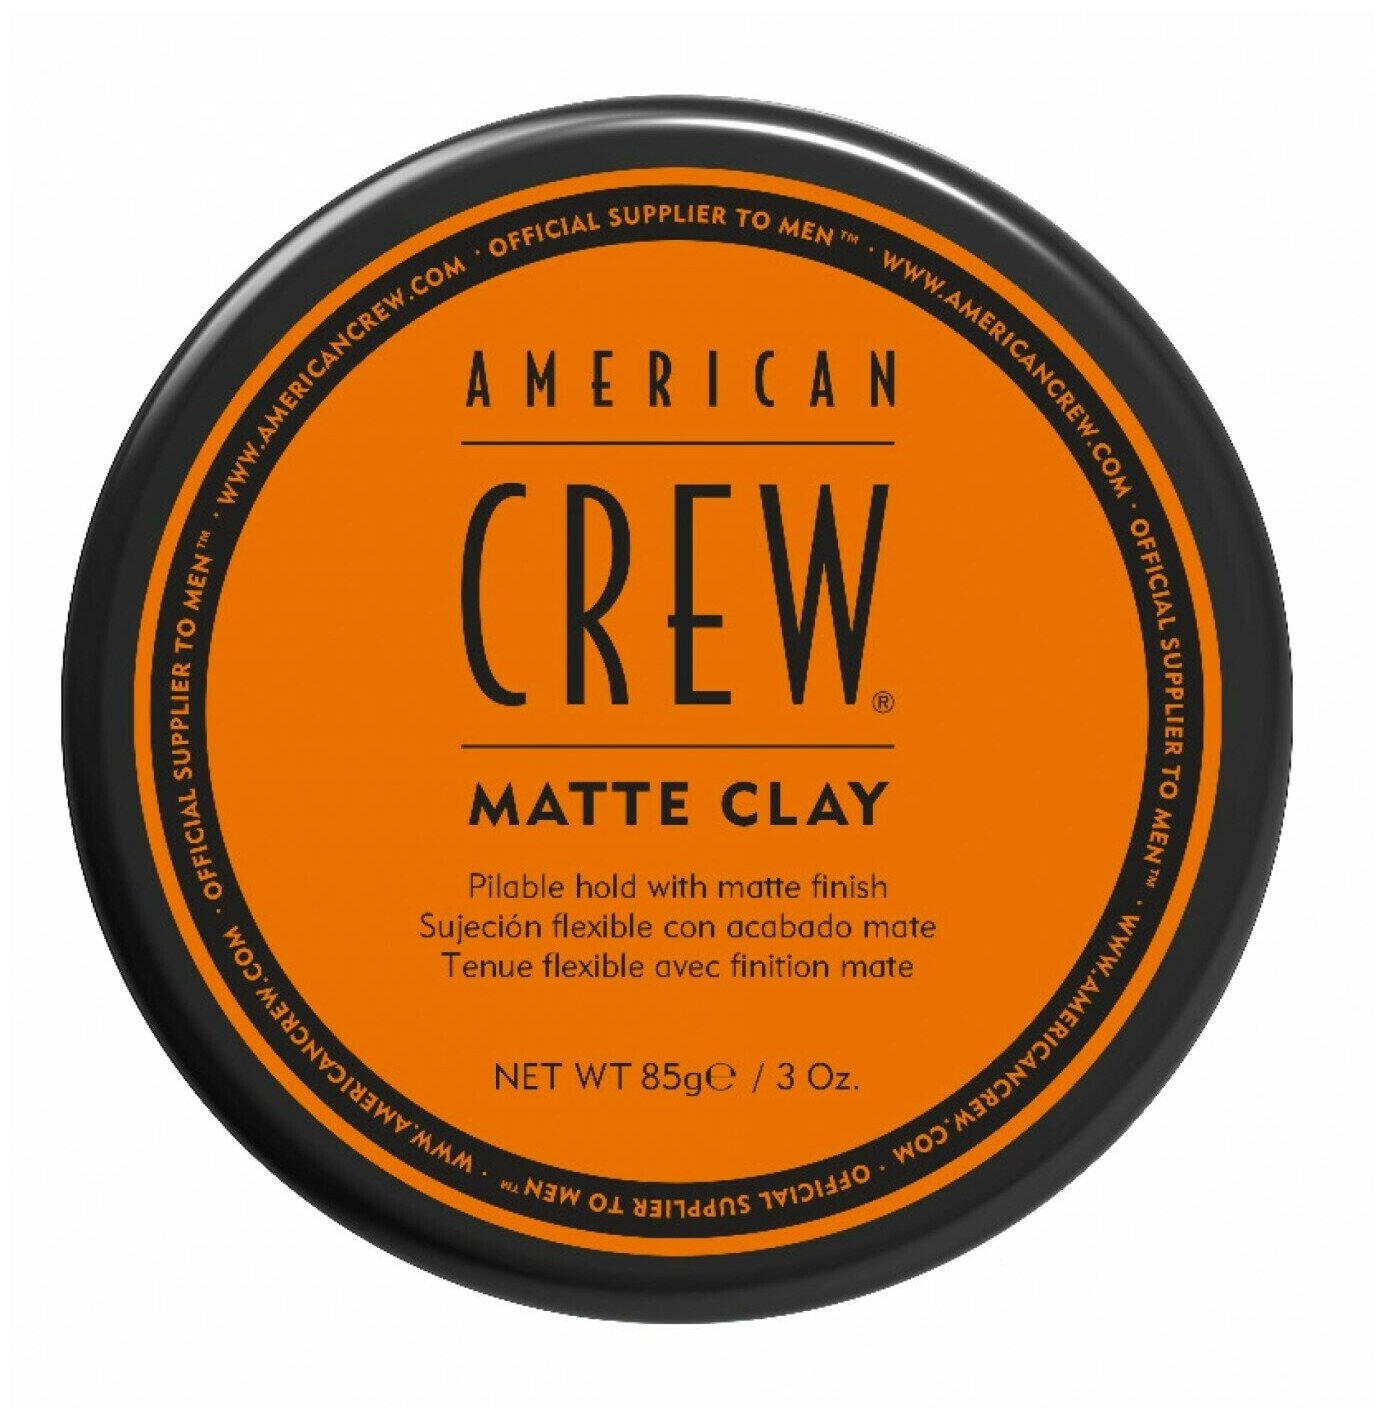 American Crew Глина Matte Clay сильная фиксация